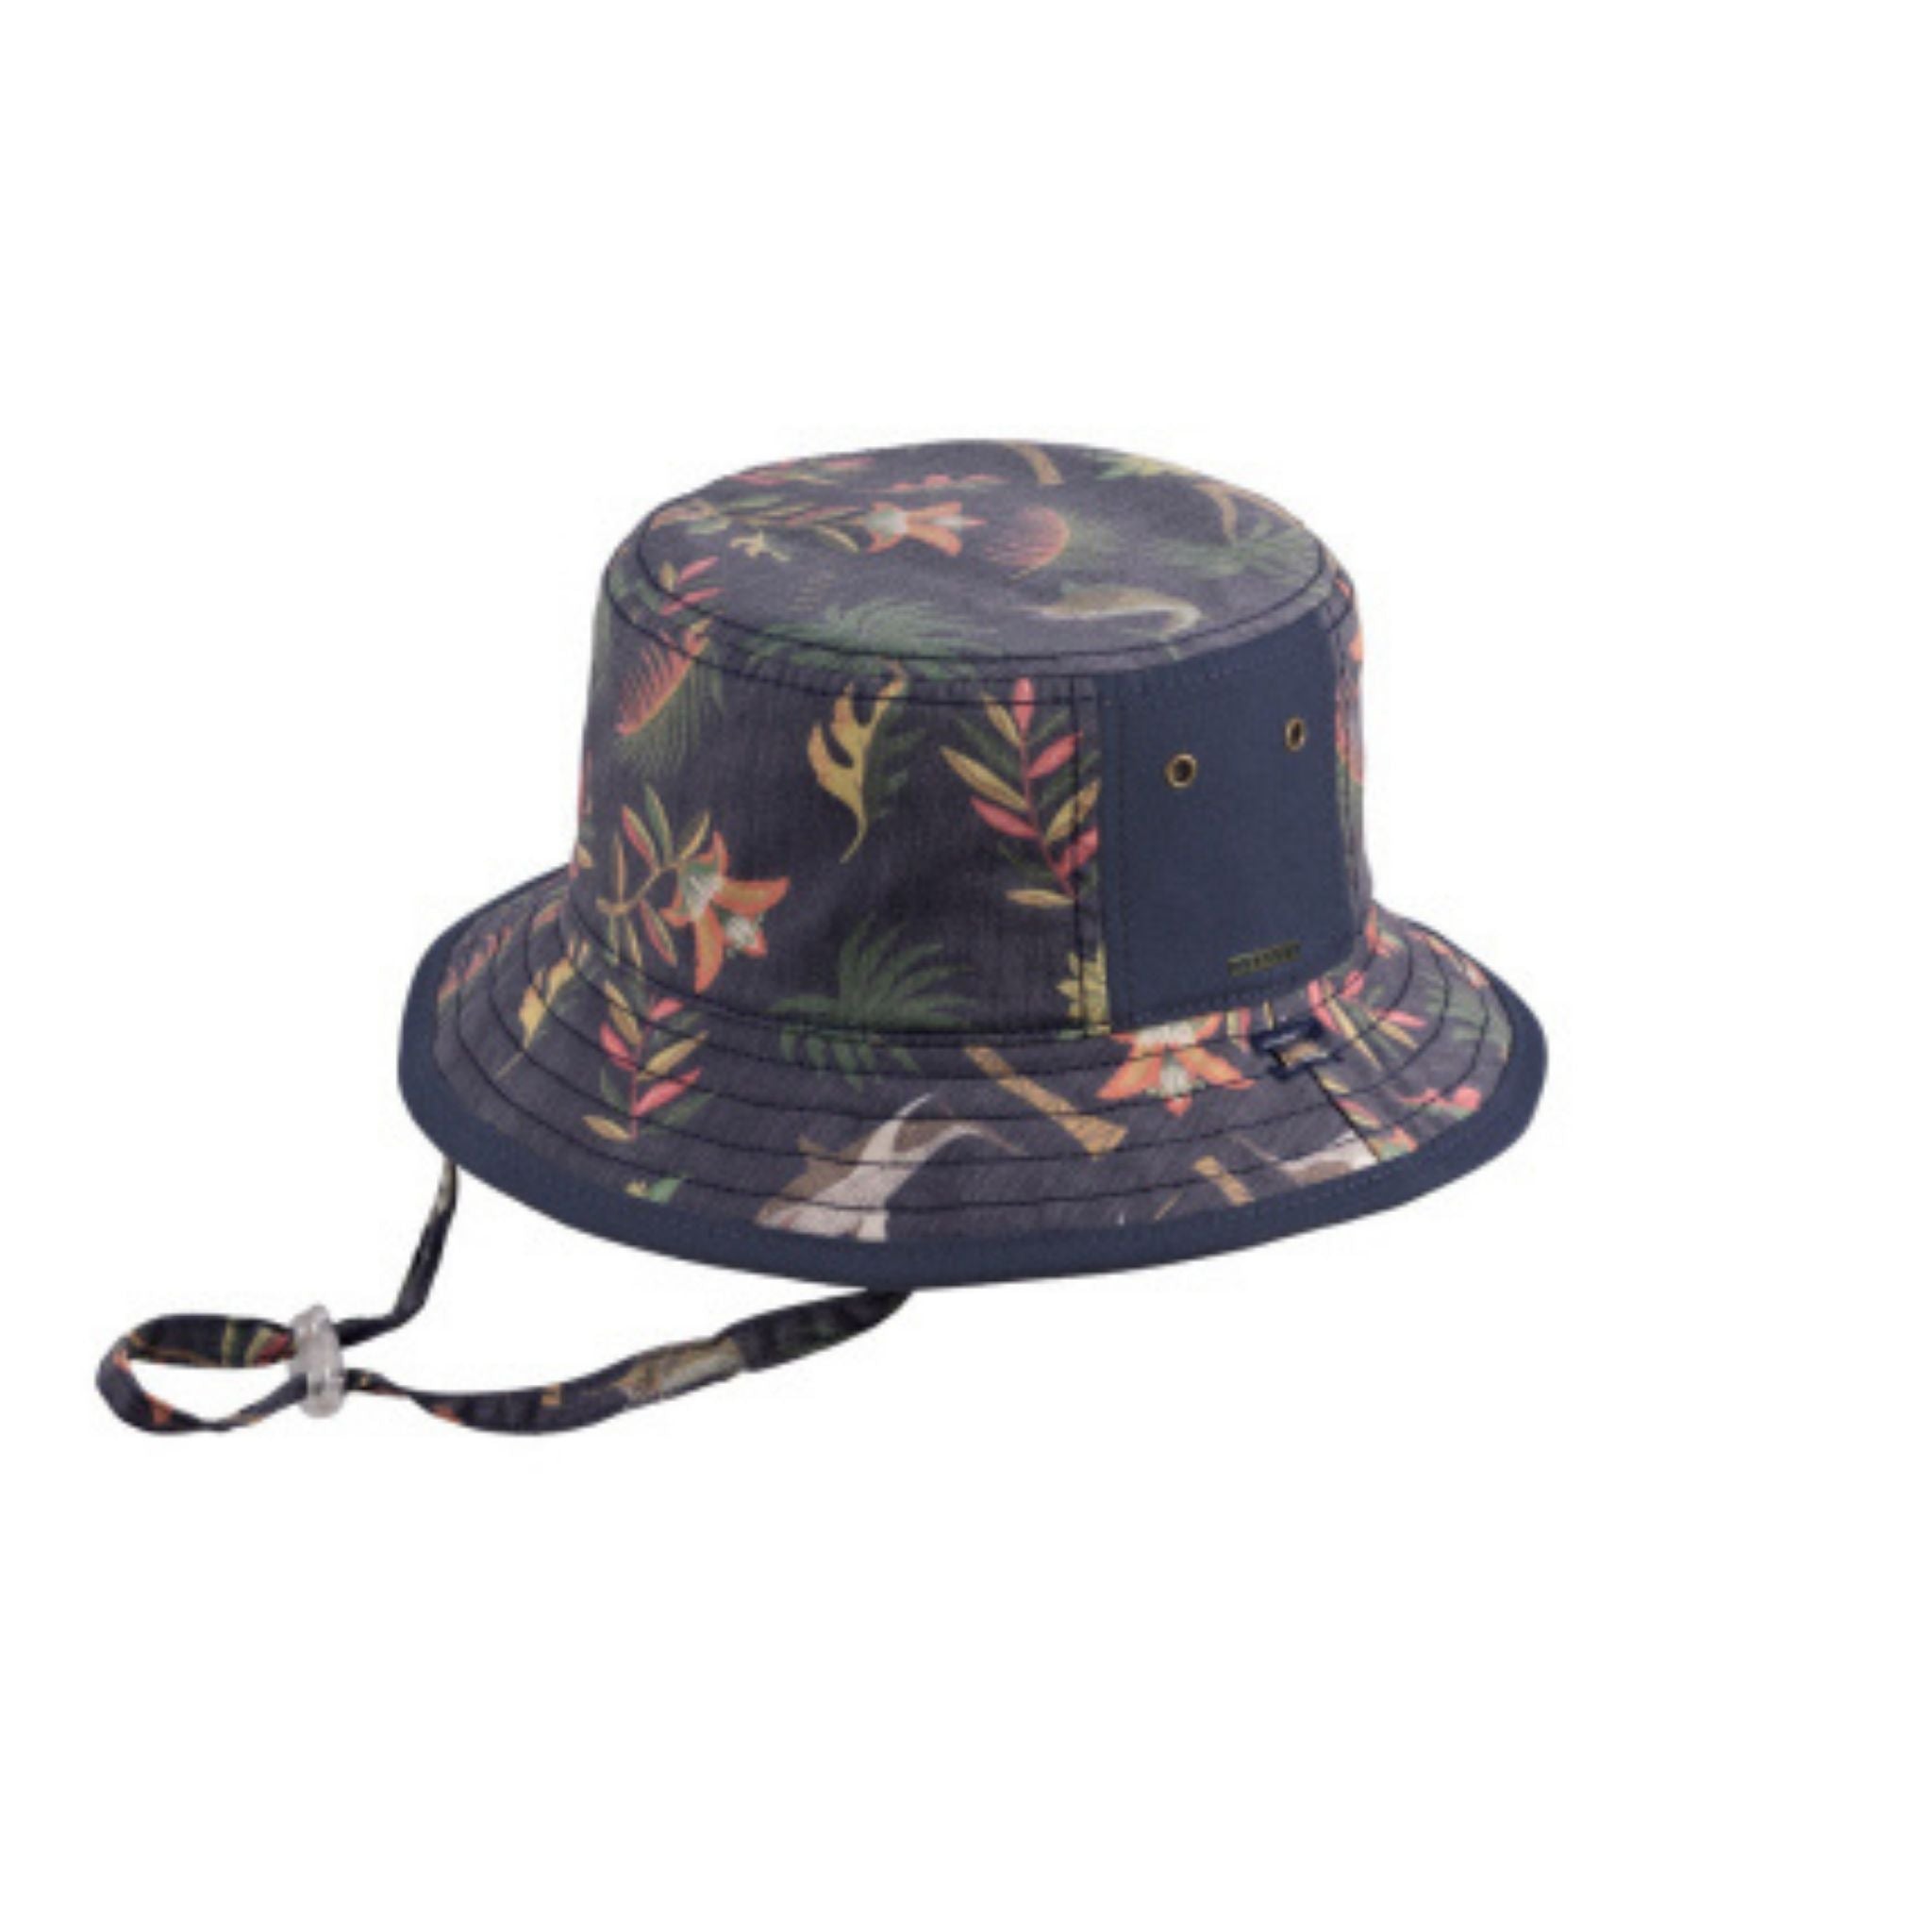 This item is unavailable -   Bucket hat, Sun hats, Funny bucket hats